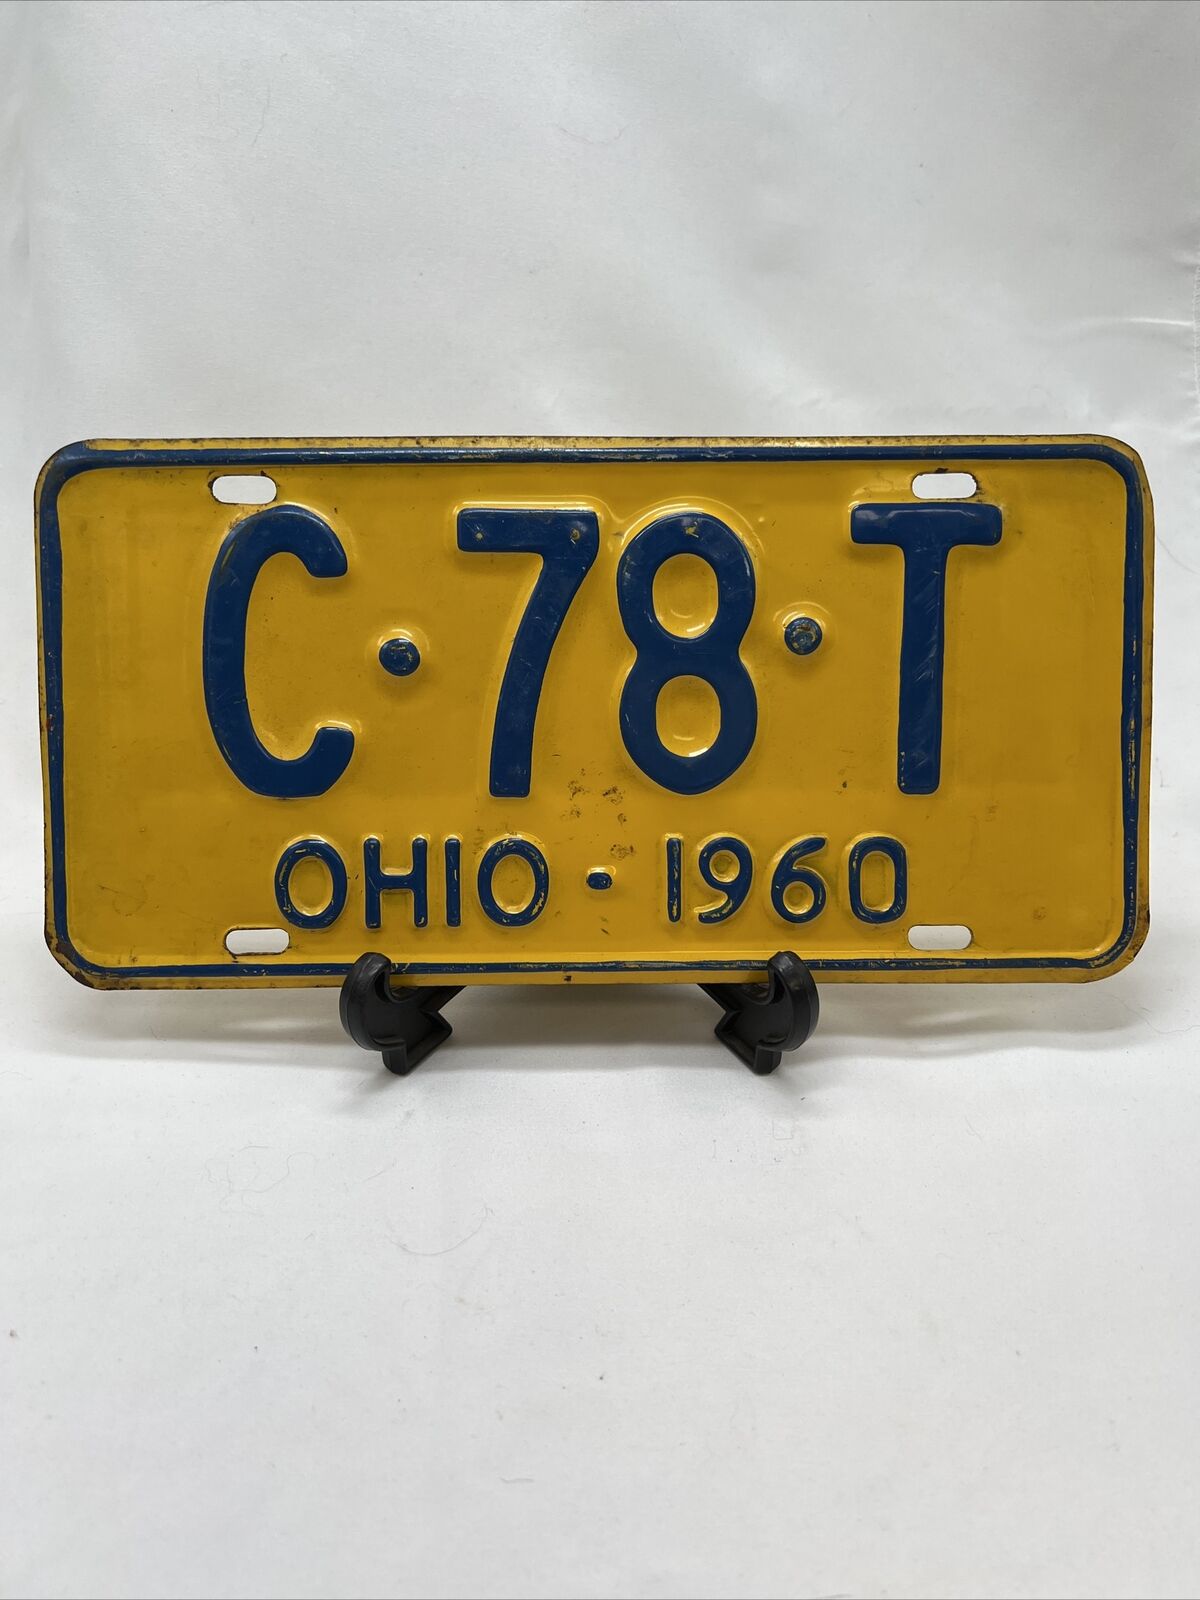 Ohio OH 1960 license plate #  C 78 T